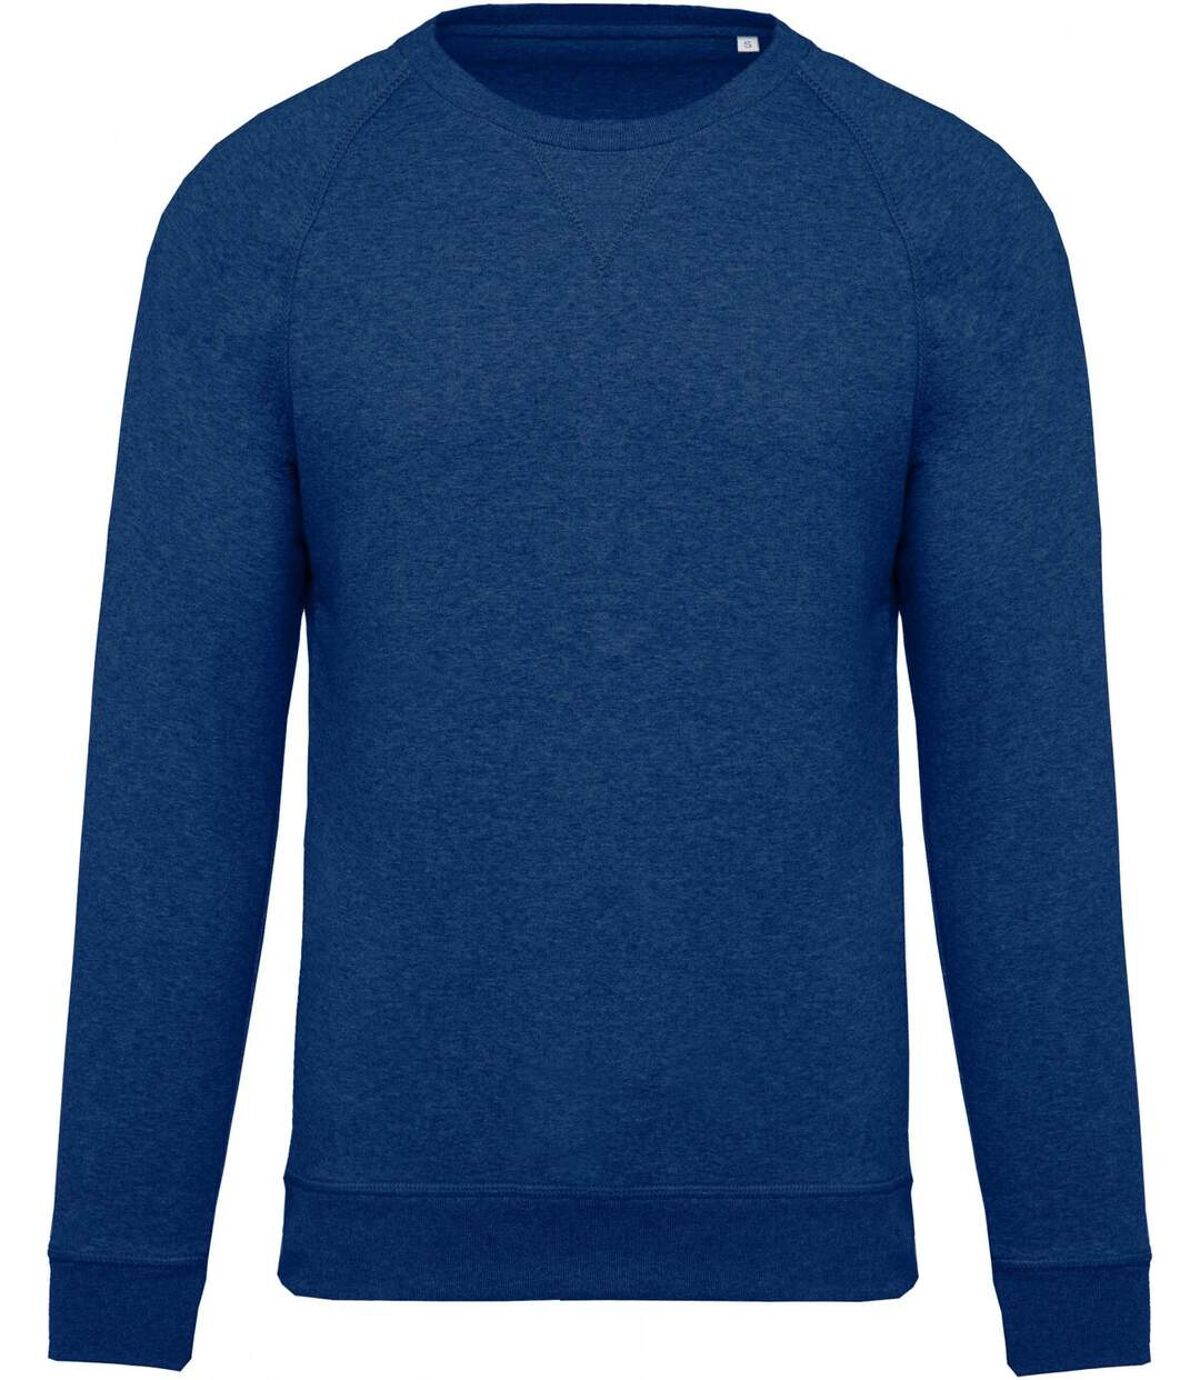 Sweat shirt coton bio - Homme - K480 - bleu océan chiné